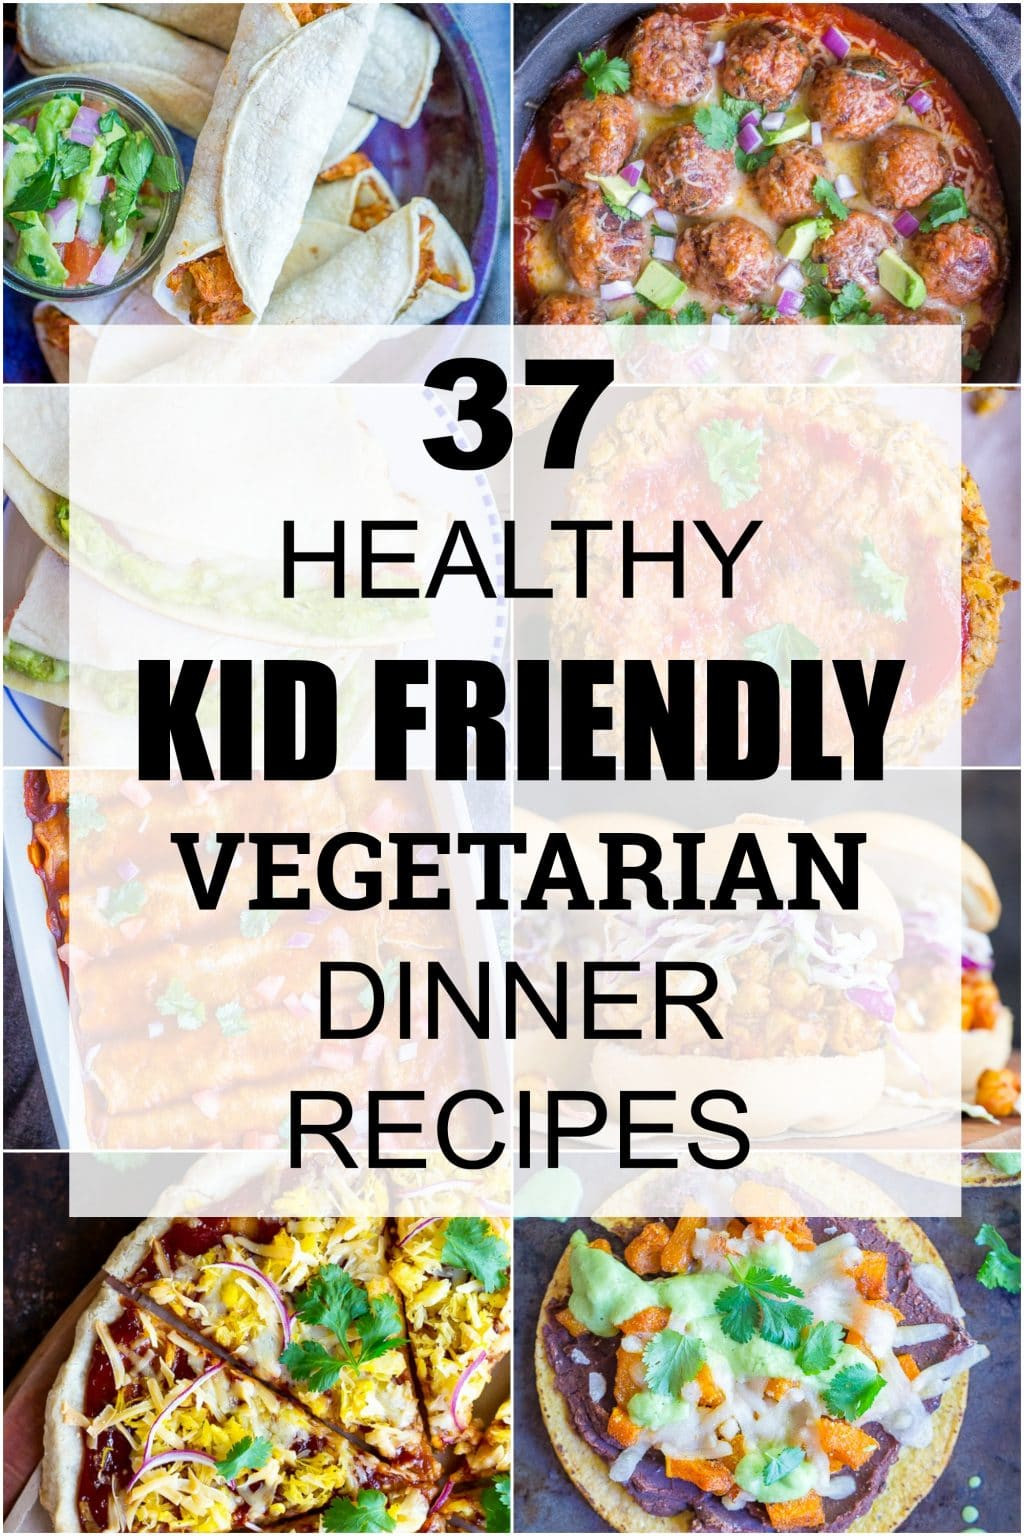 Vegetarian Children Recipes
 37 Healthy Kid Friendly Ve arian Dinner Recipes She